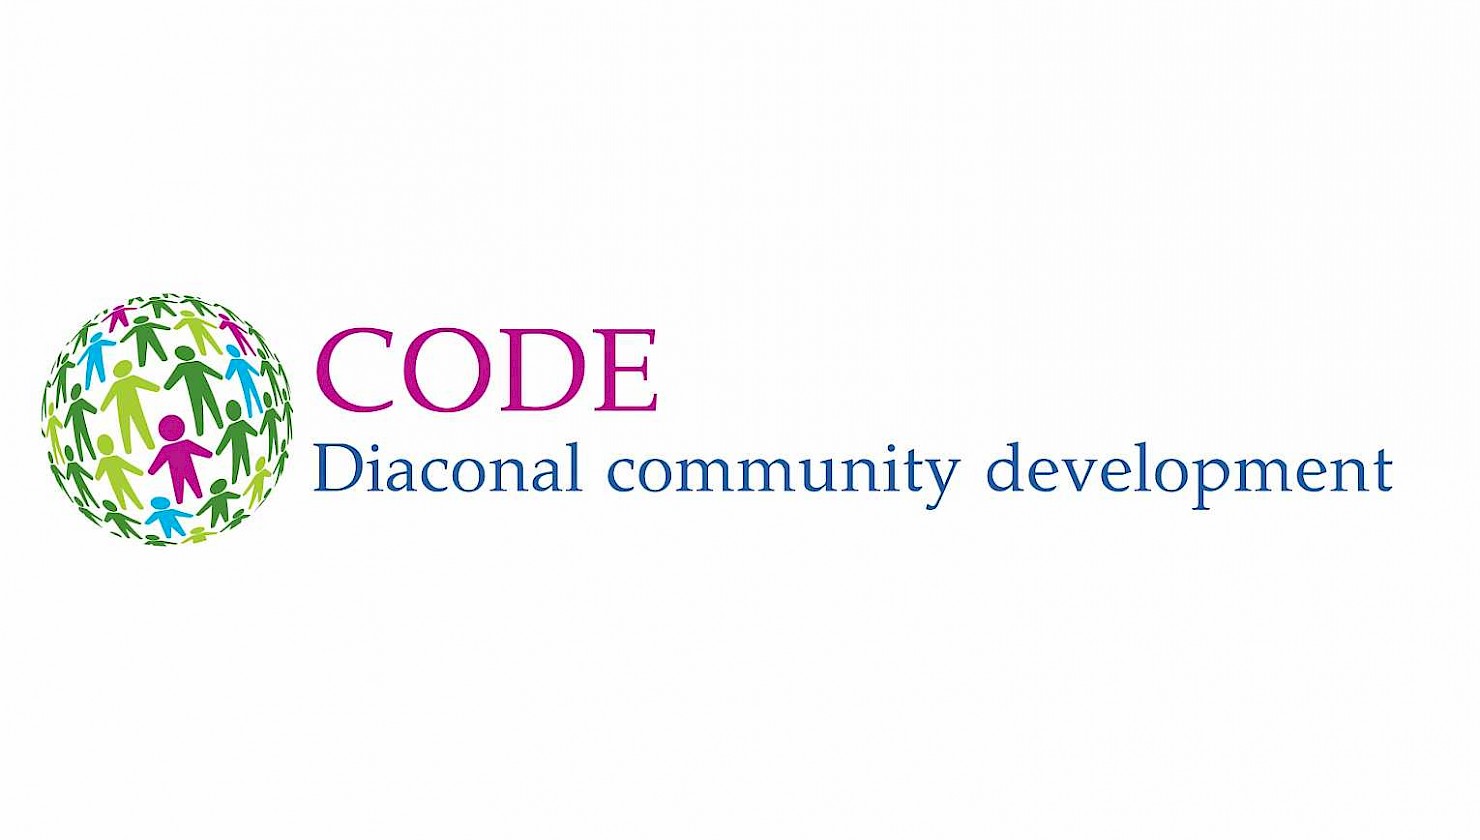 Diaconal community development